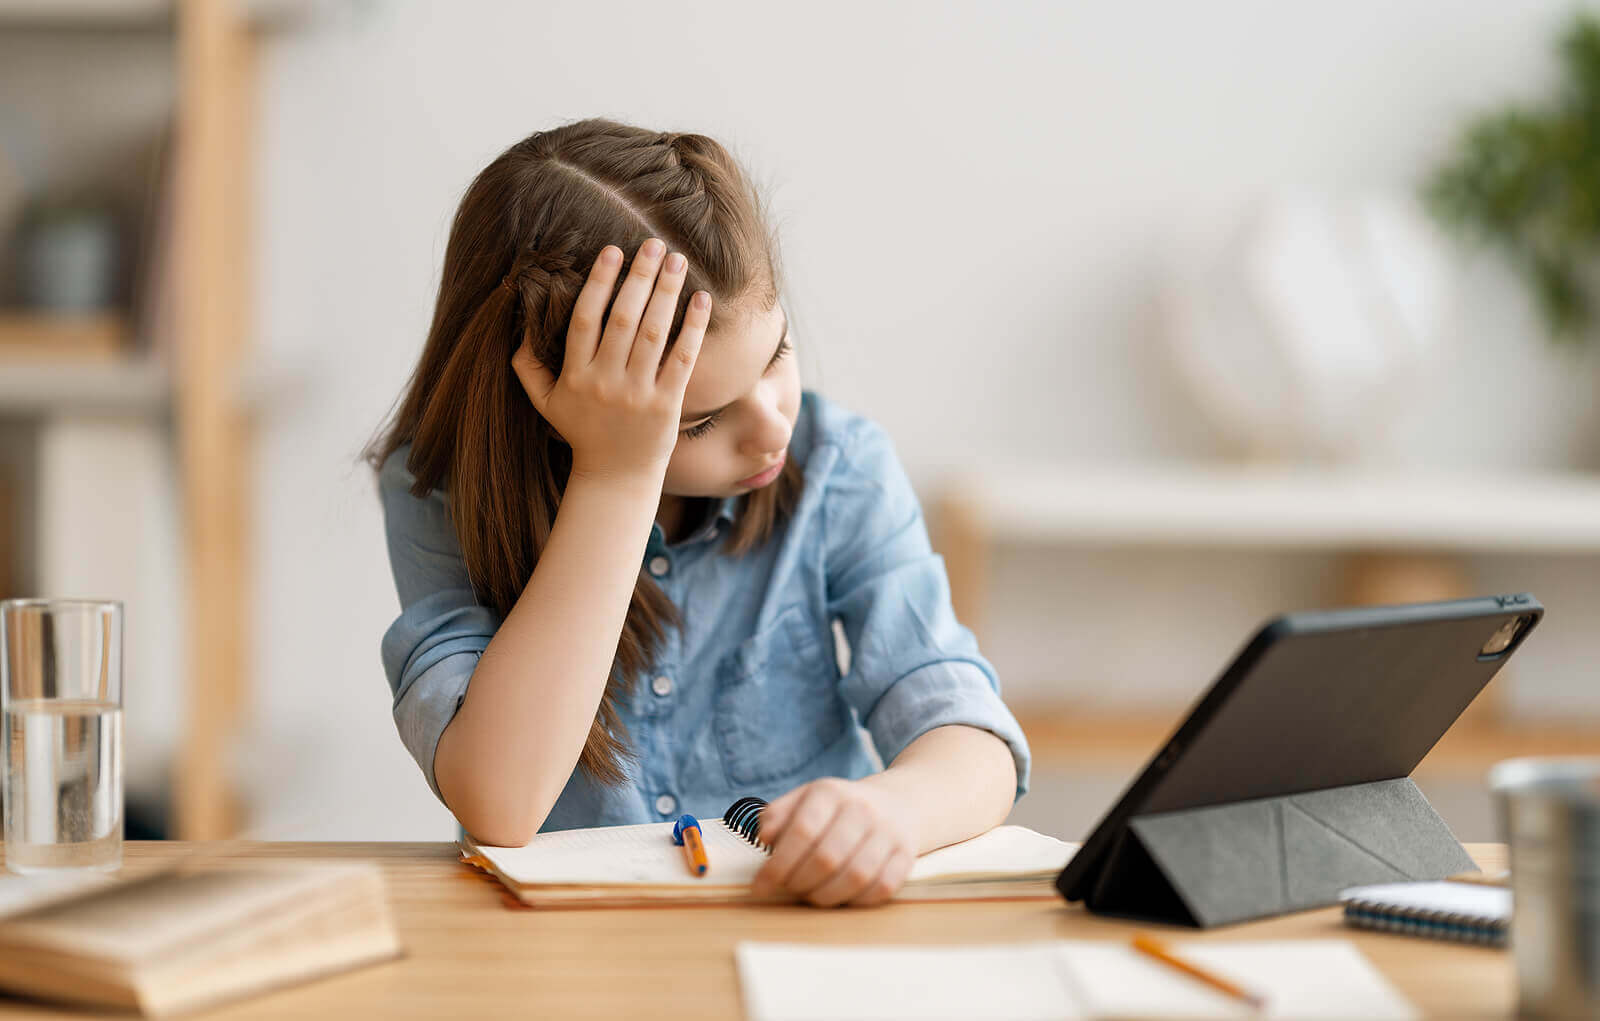 can a parent refuse homework